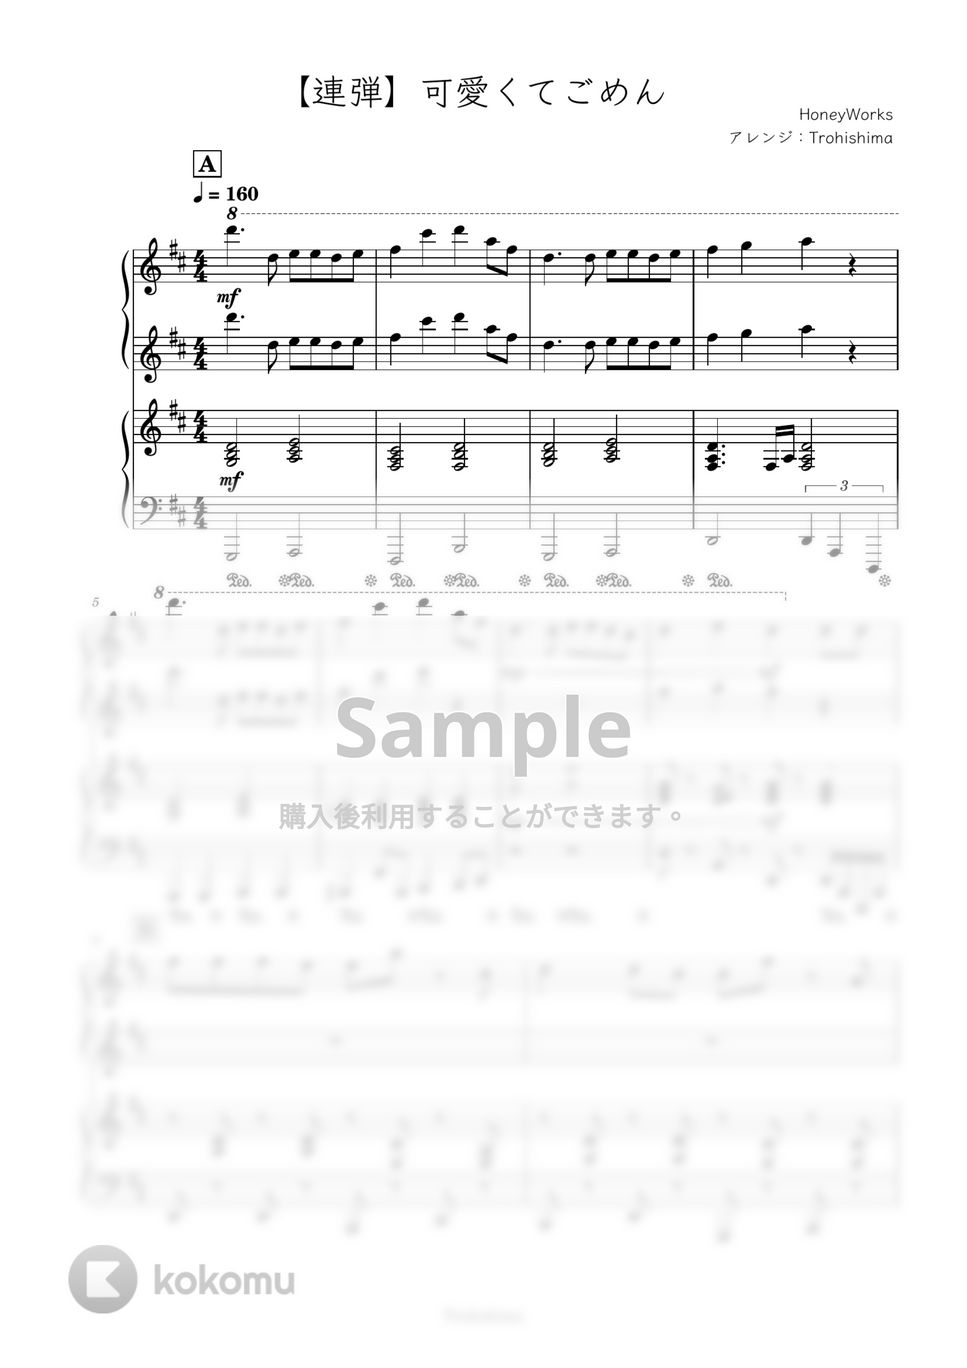 HoneyWorks - 可愛くてごめん (ピアノ連弾) by Trohishima